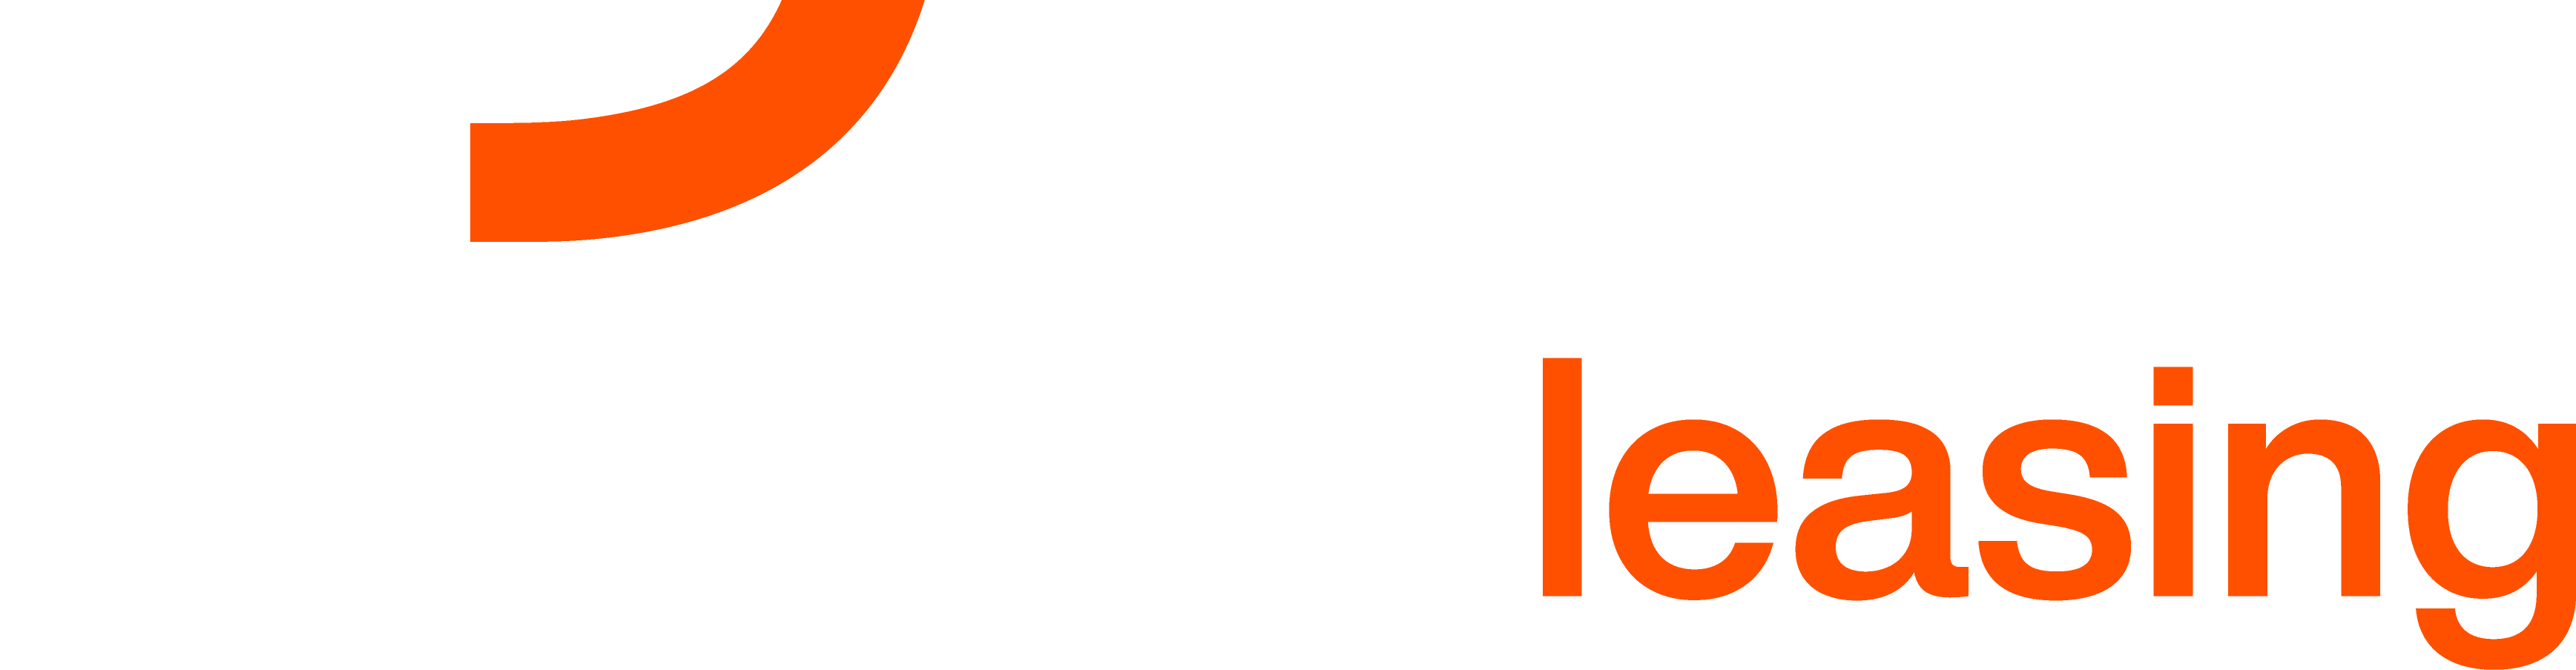 Sixt Leasing logo